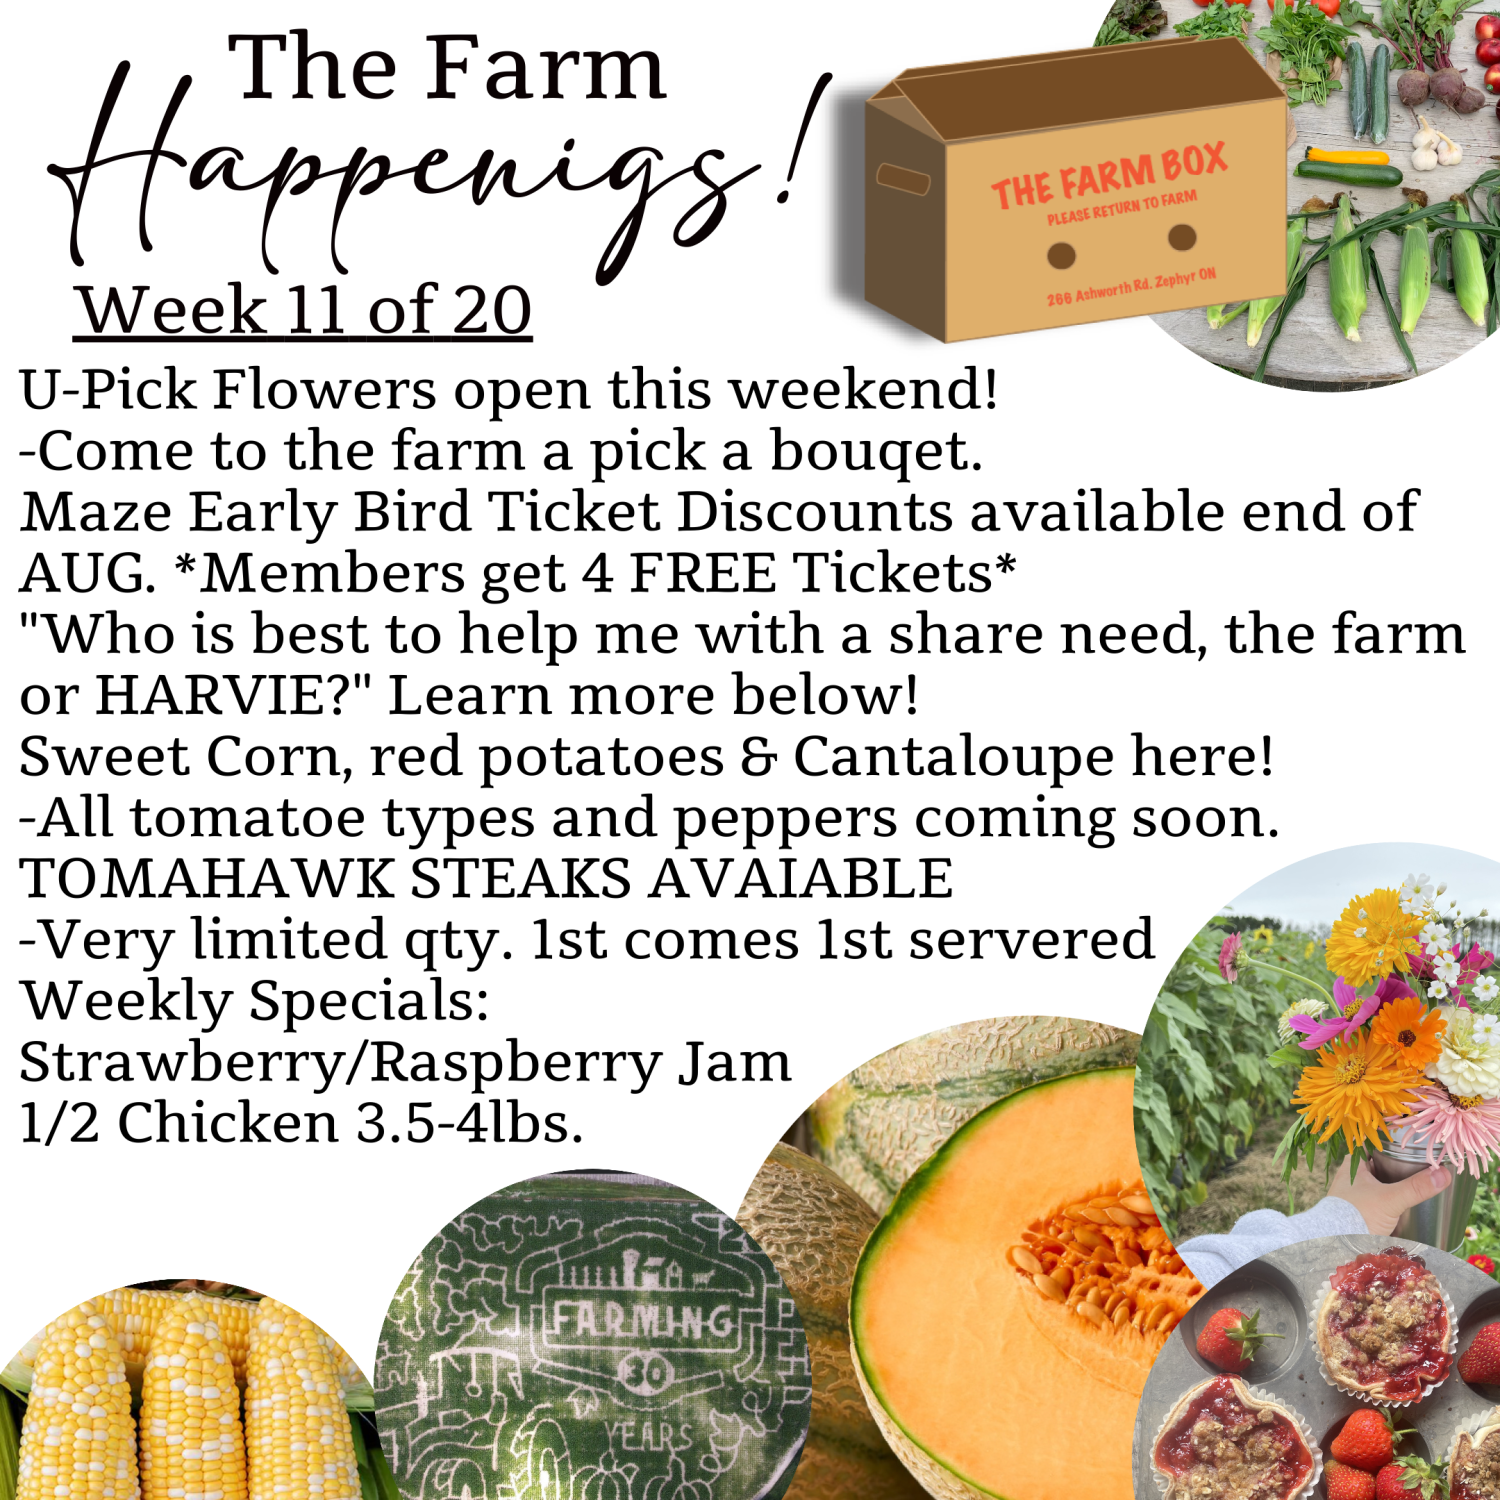 Previous Happening: "The Farm Box"-Coopers CSA Farm Farm Happenings: Week 11 of 20